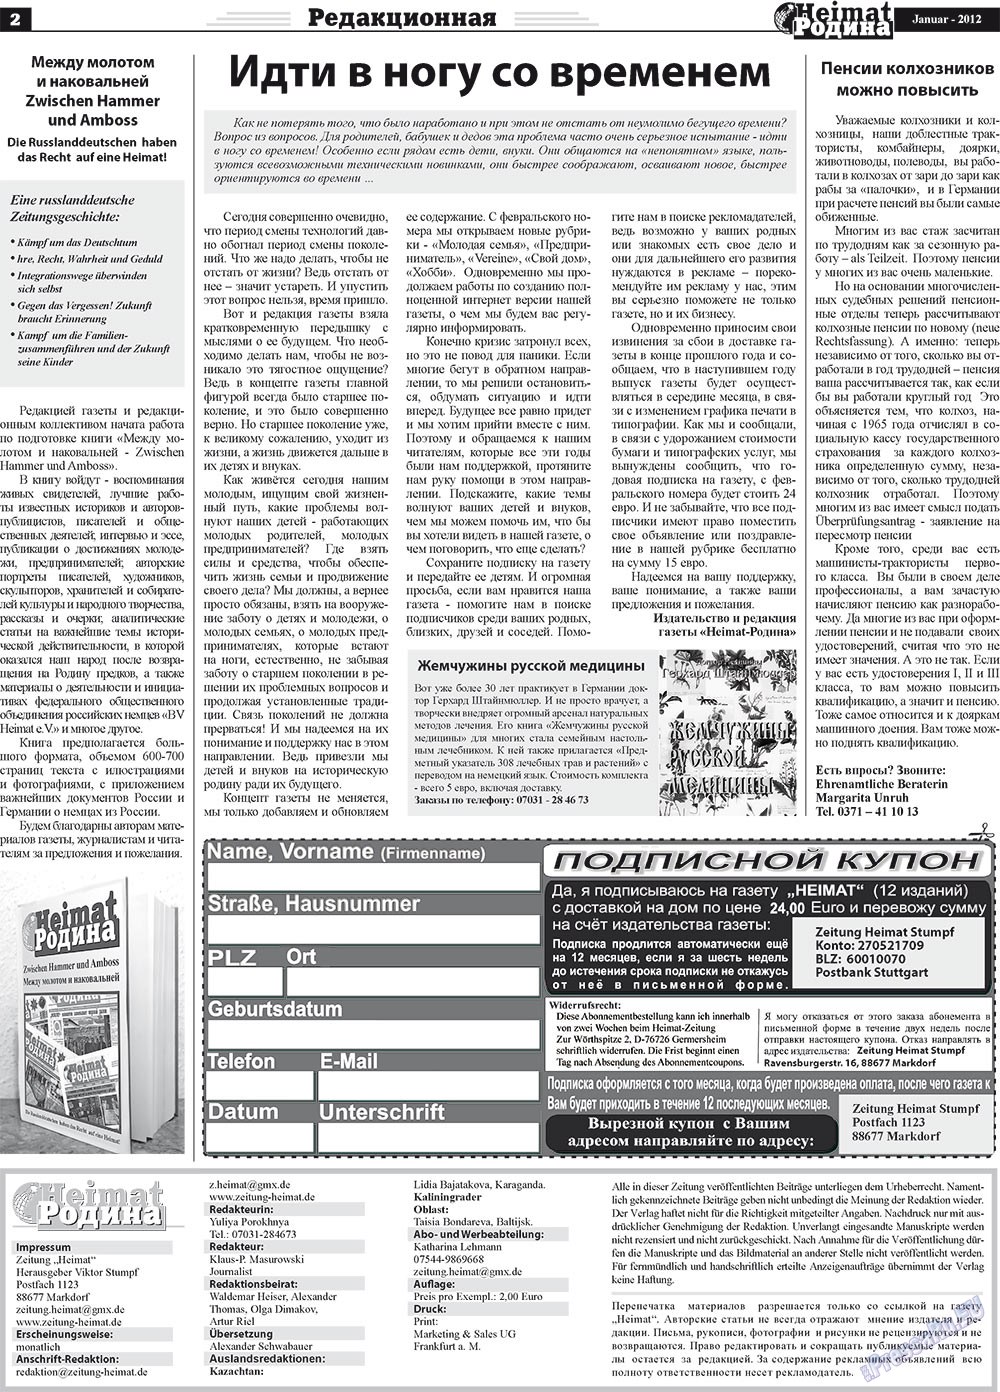 Heimat-Родина, газета. 2012 №1 стр.2